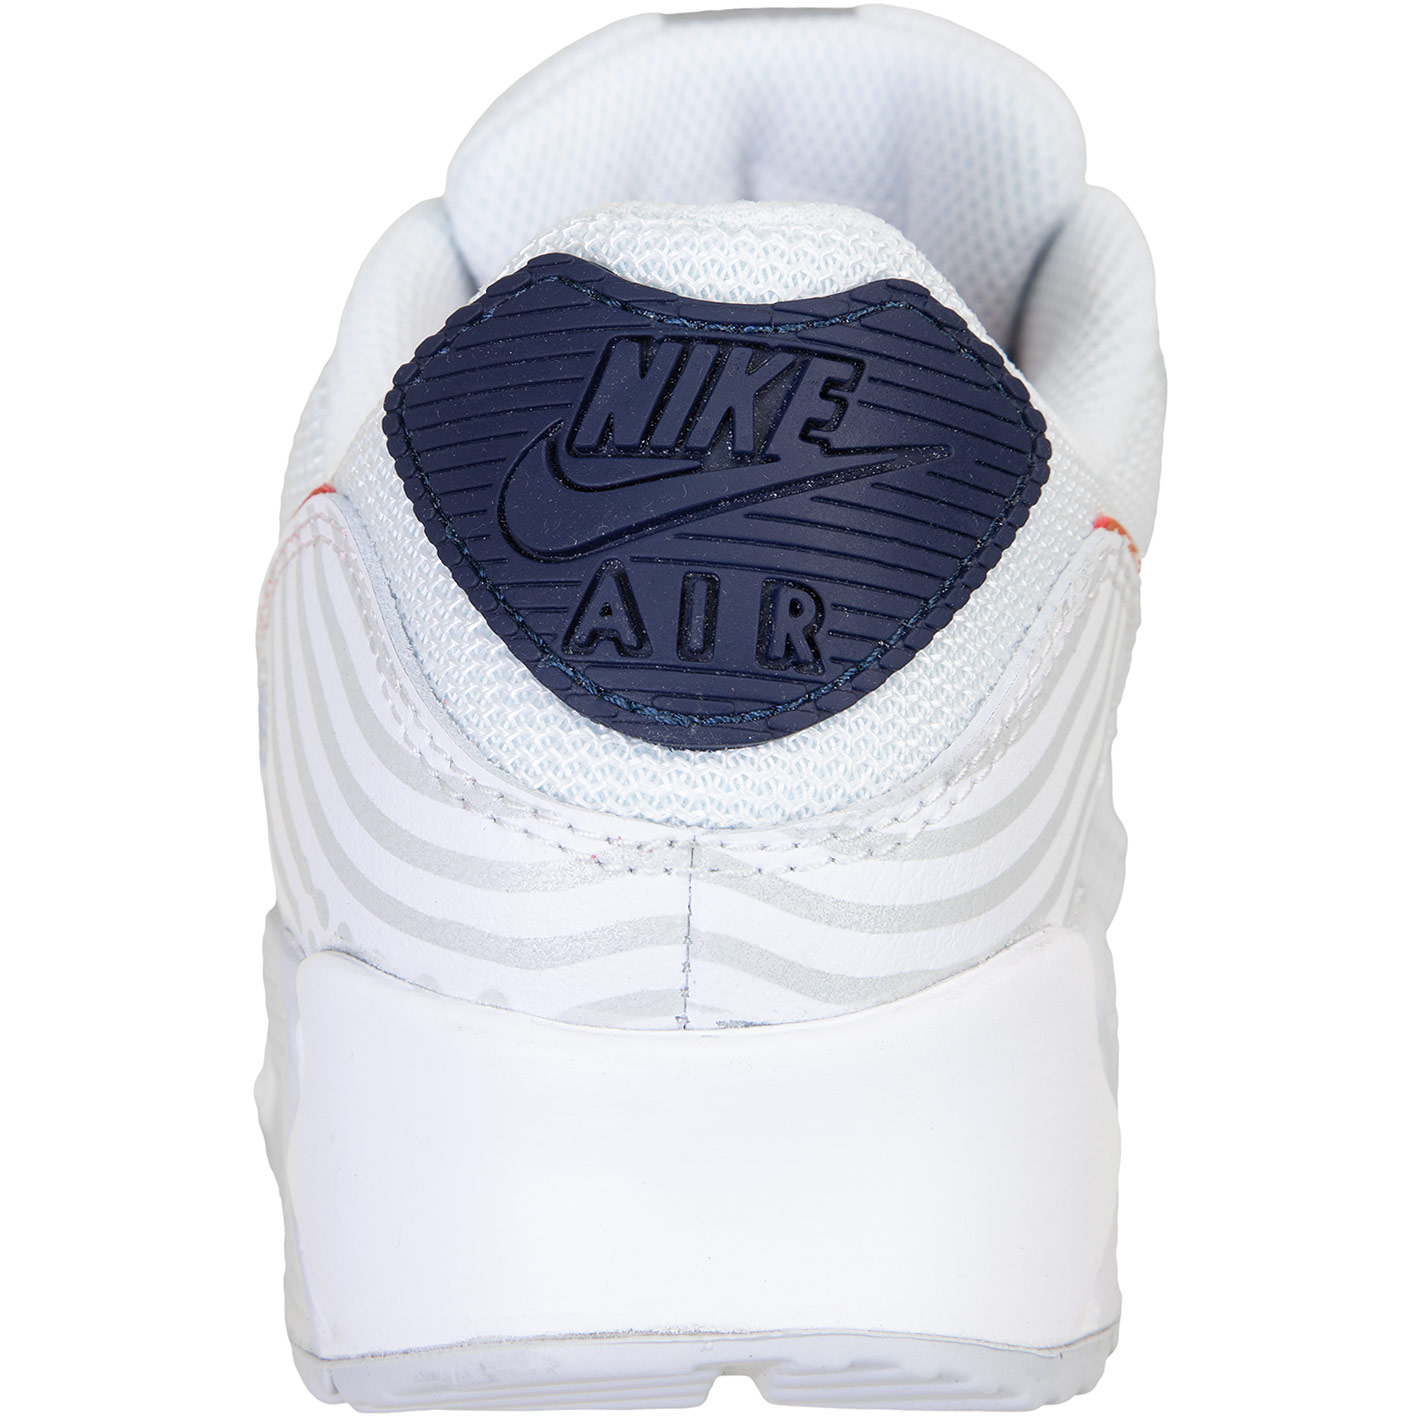 ☆ Nike Air Max 90 Sneaker weiß/rot - hier bestellen!